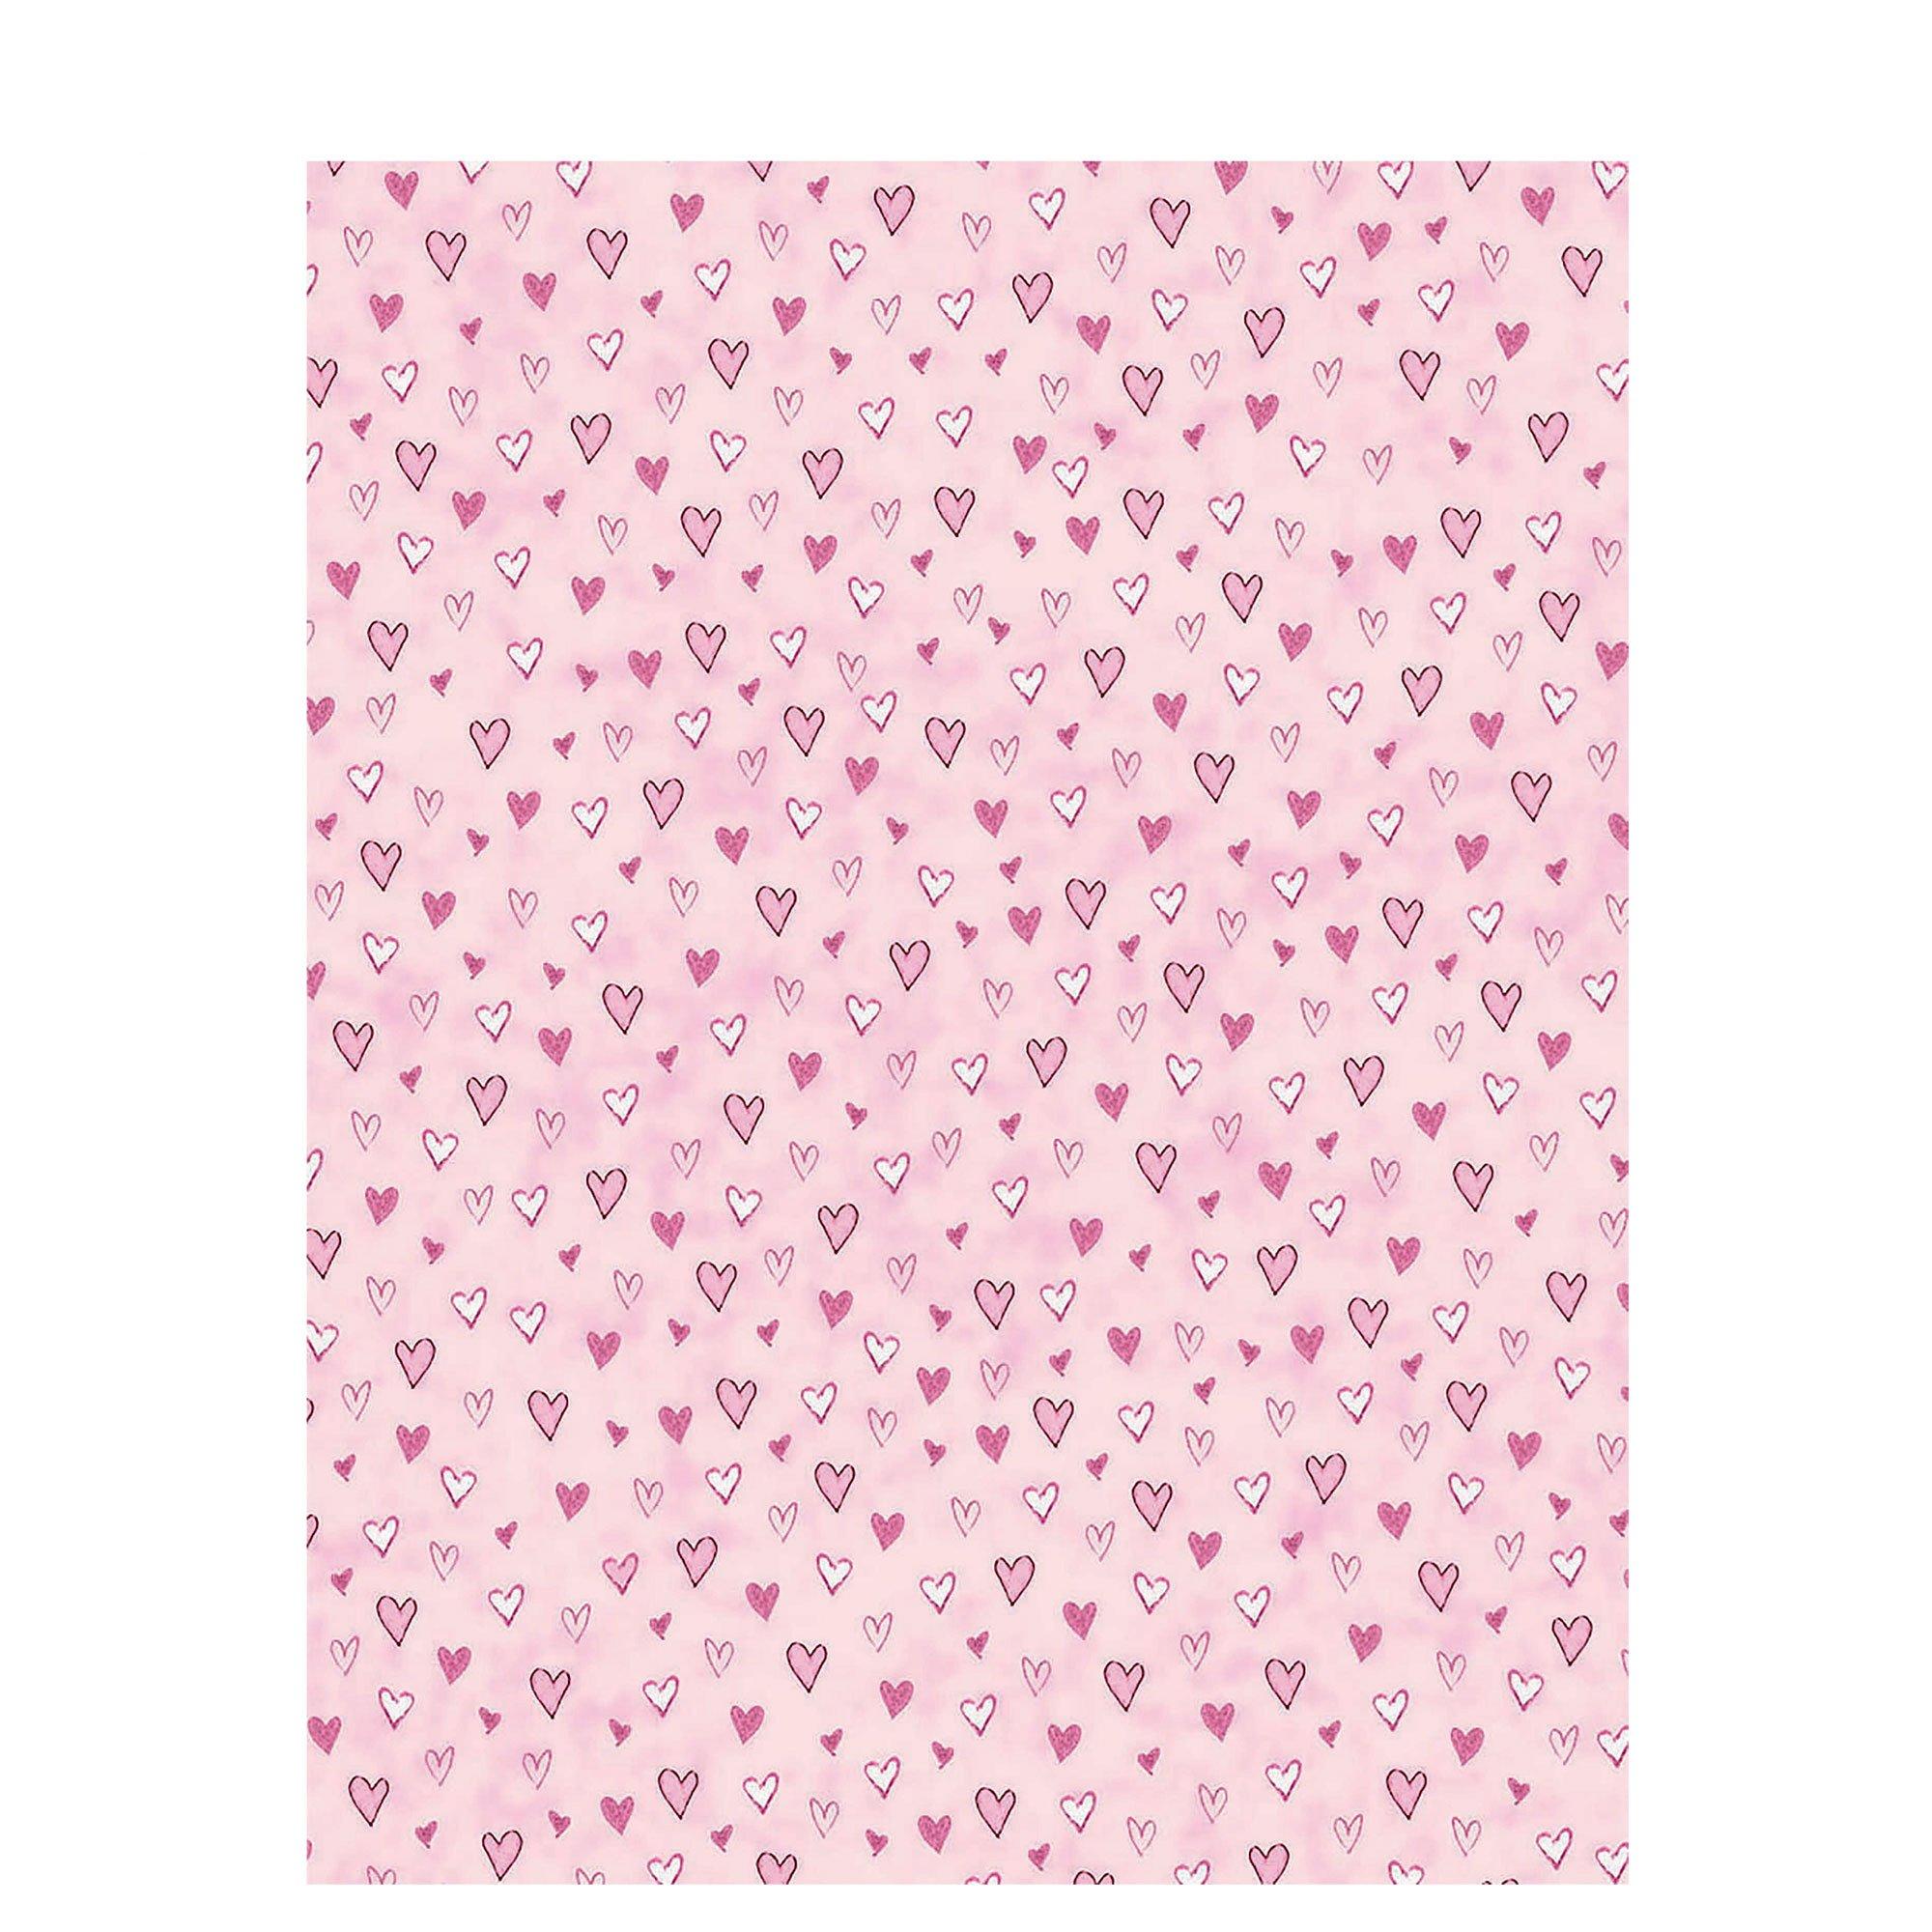 Blush Pink Hearts Pattern White Scrapbook Paper